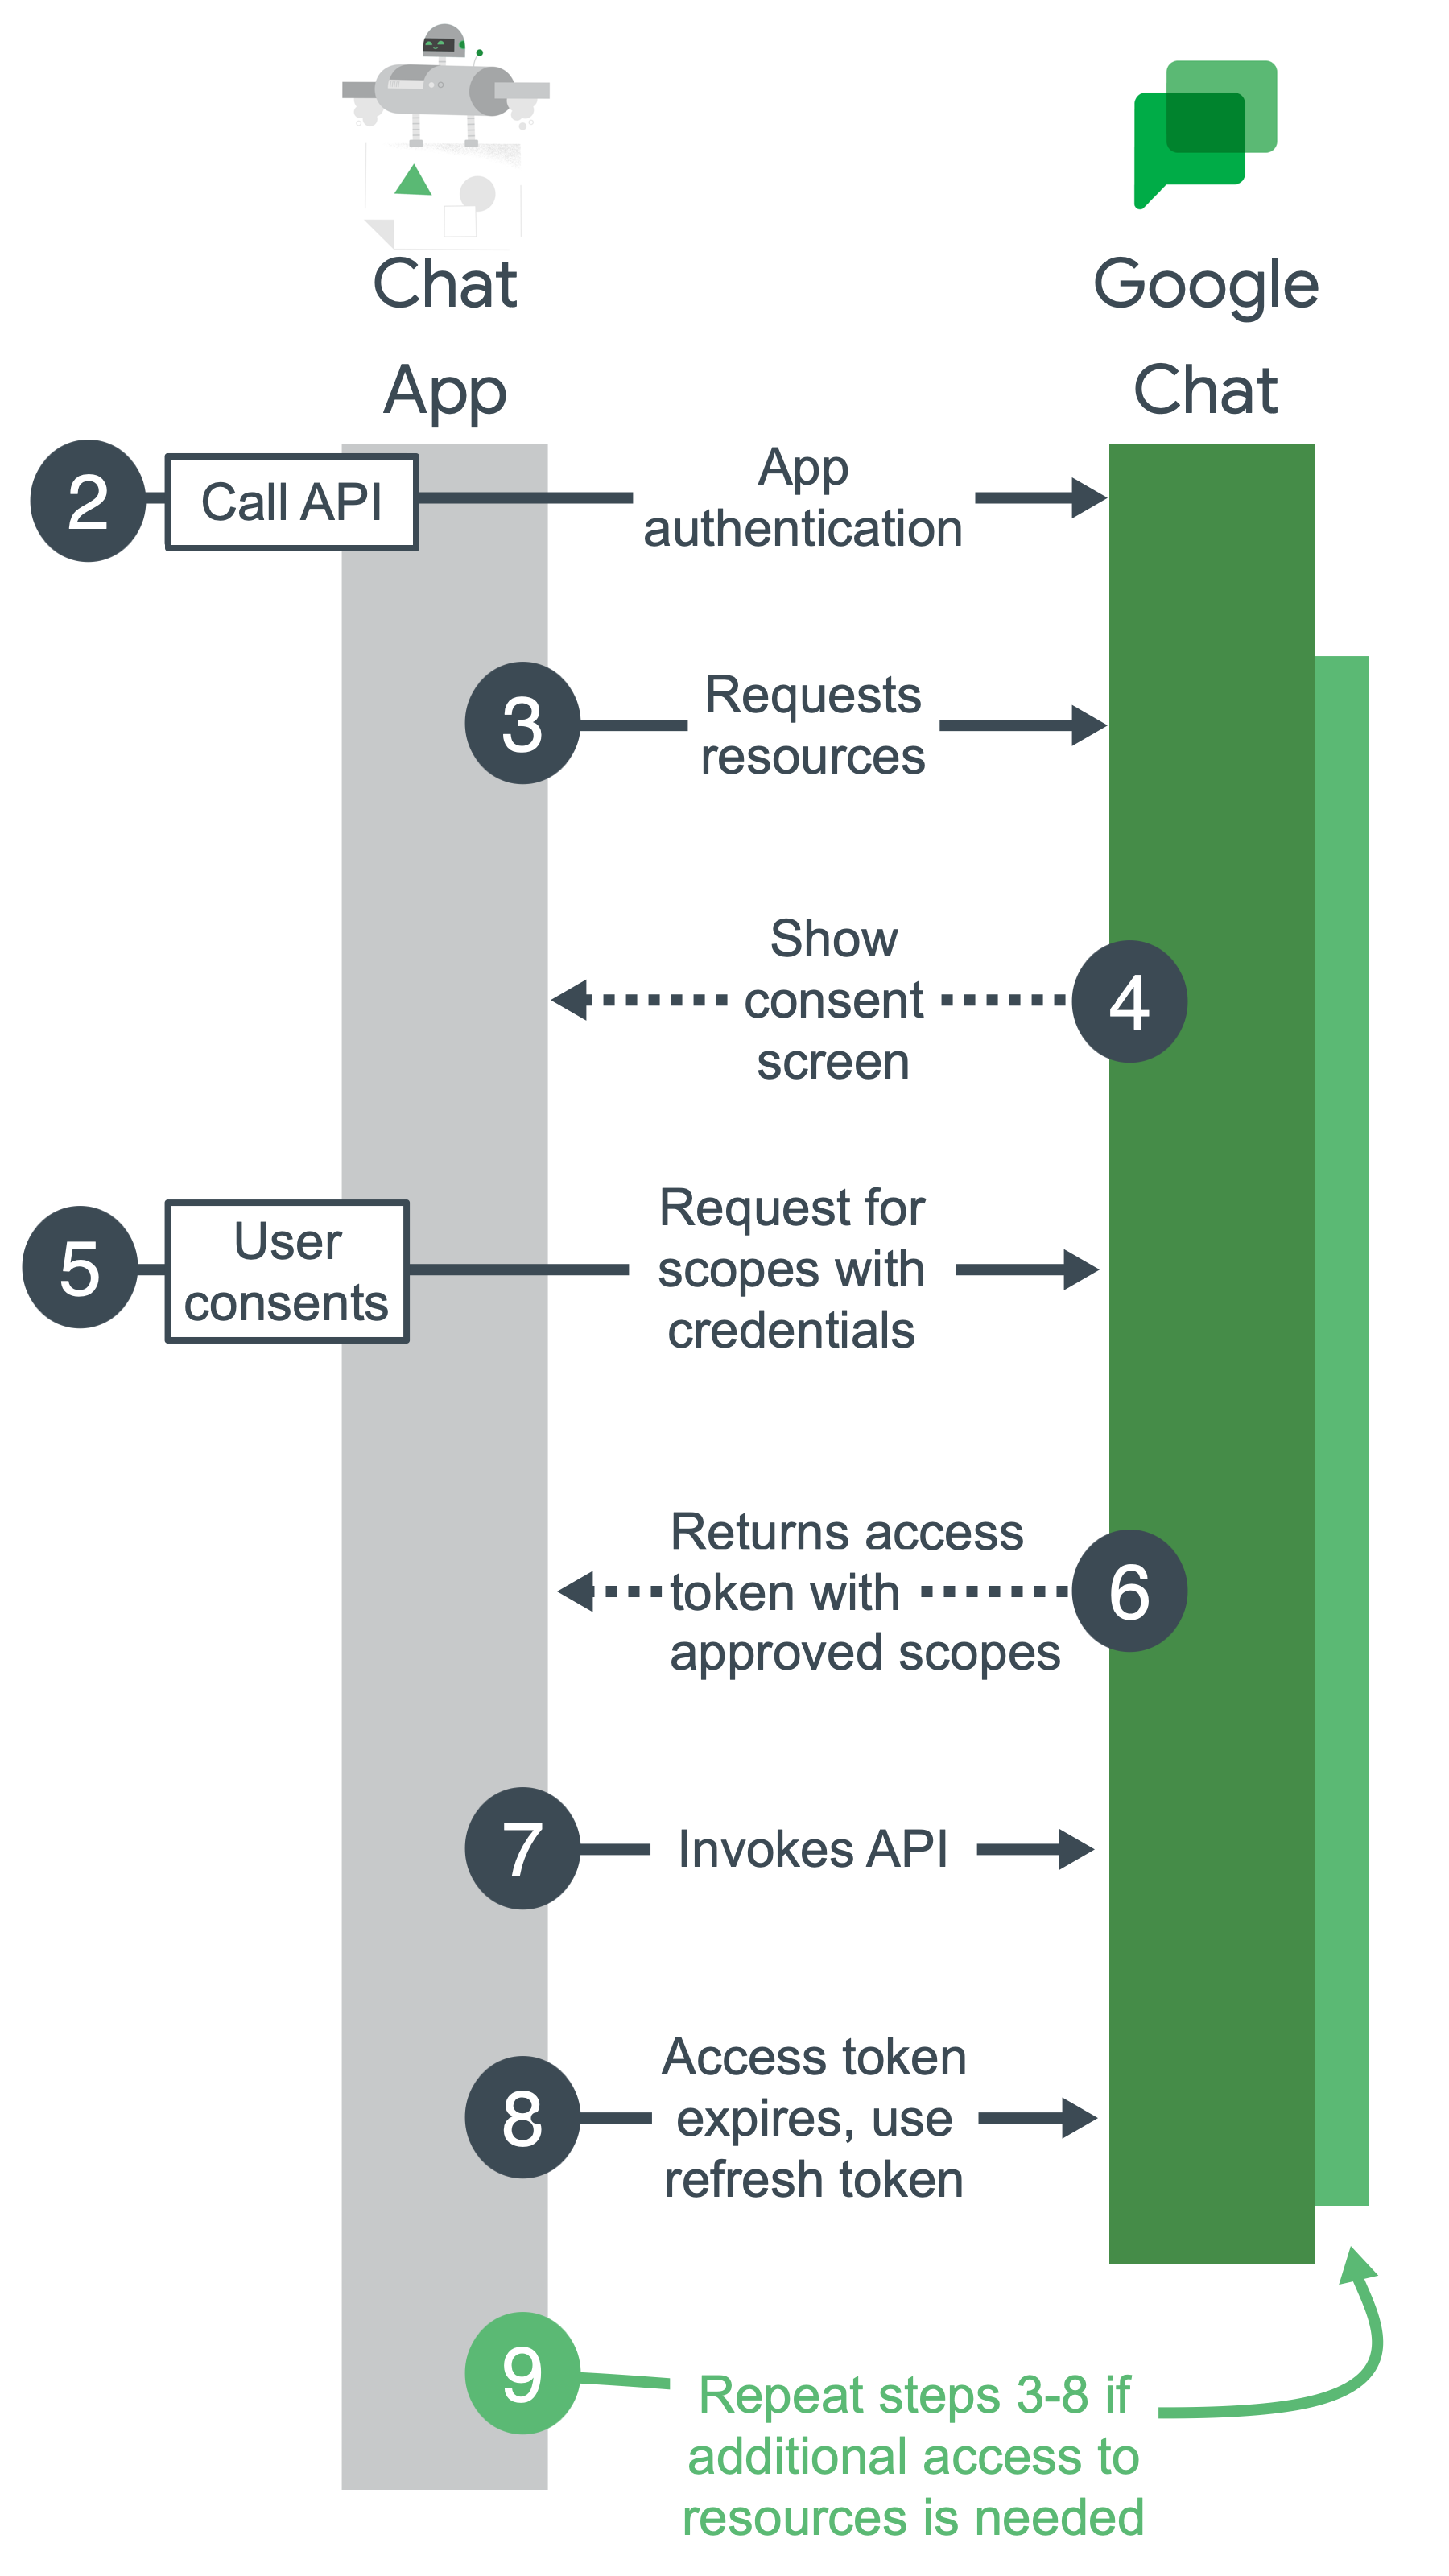 Google Chat 驗證和授權的概要步驟